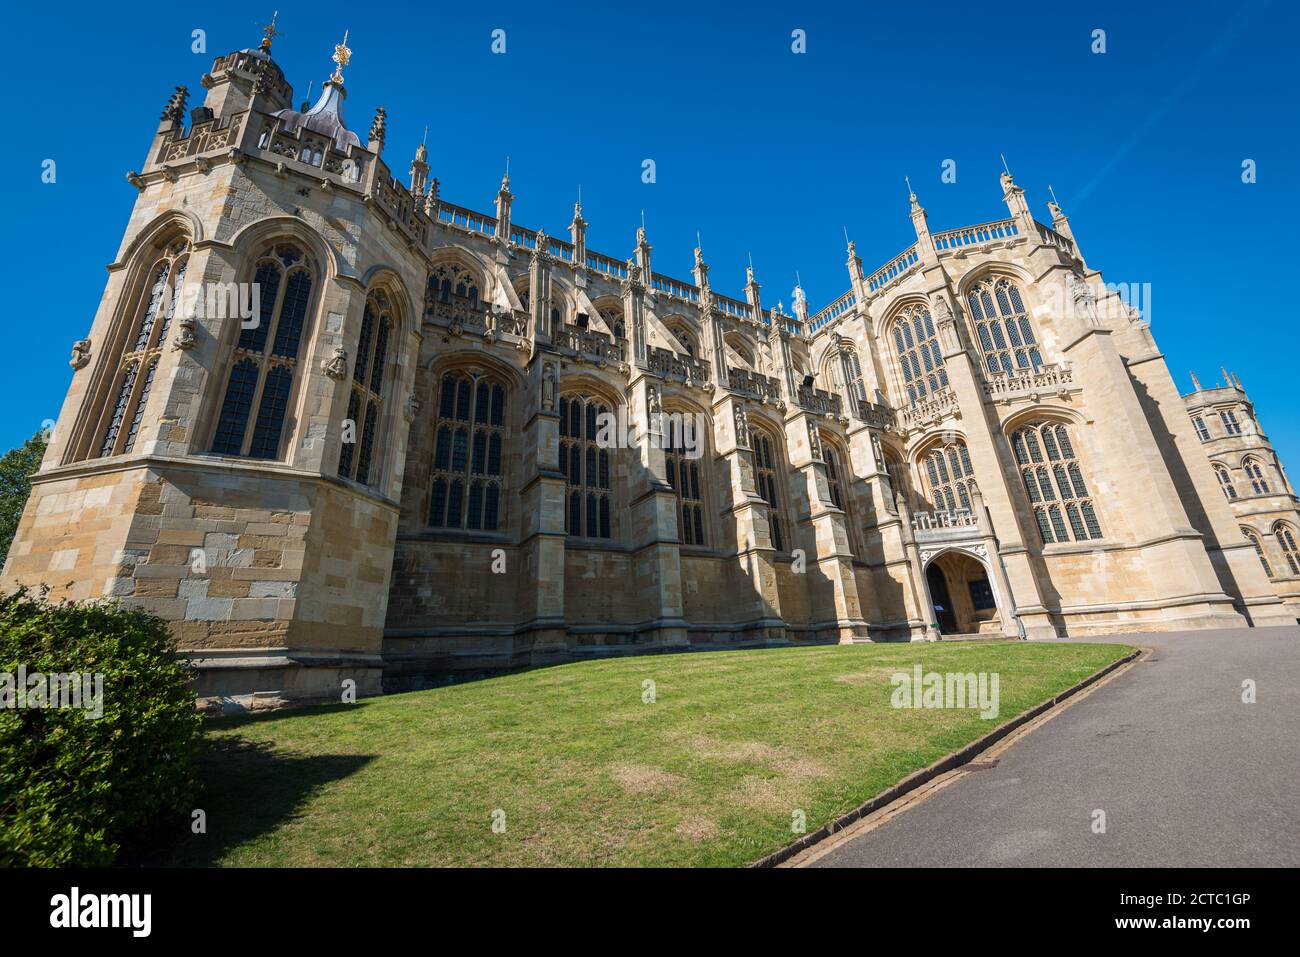 Windsor Castle - St George's Chapel, United Kingdom Stock Photo